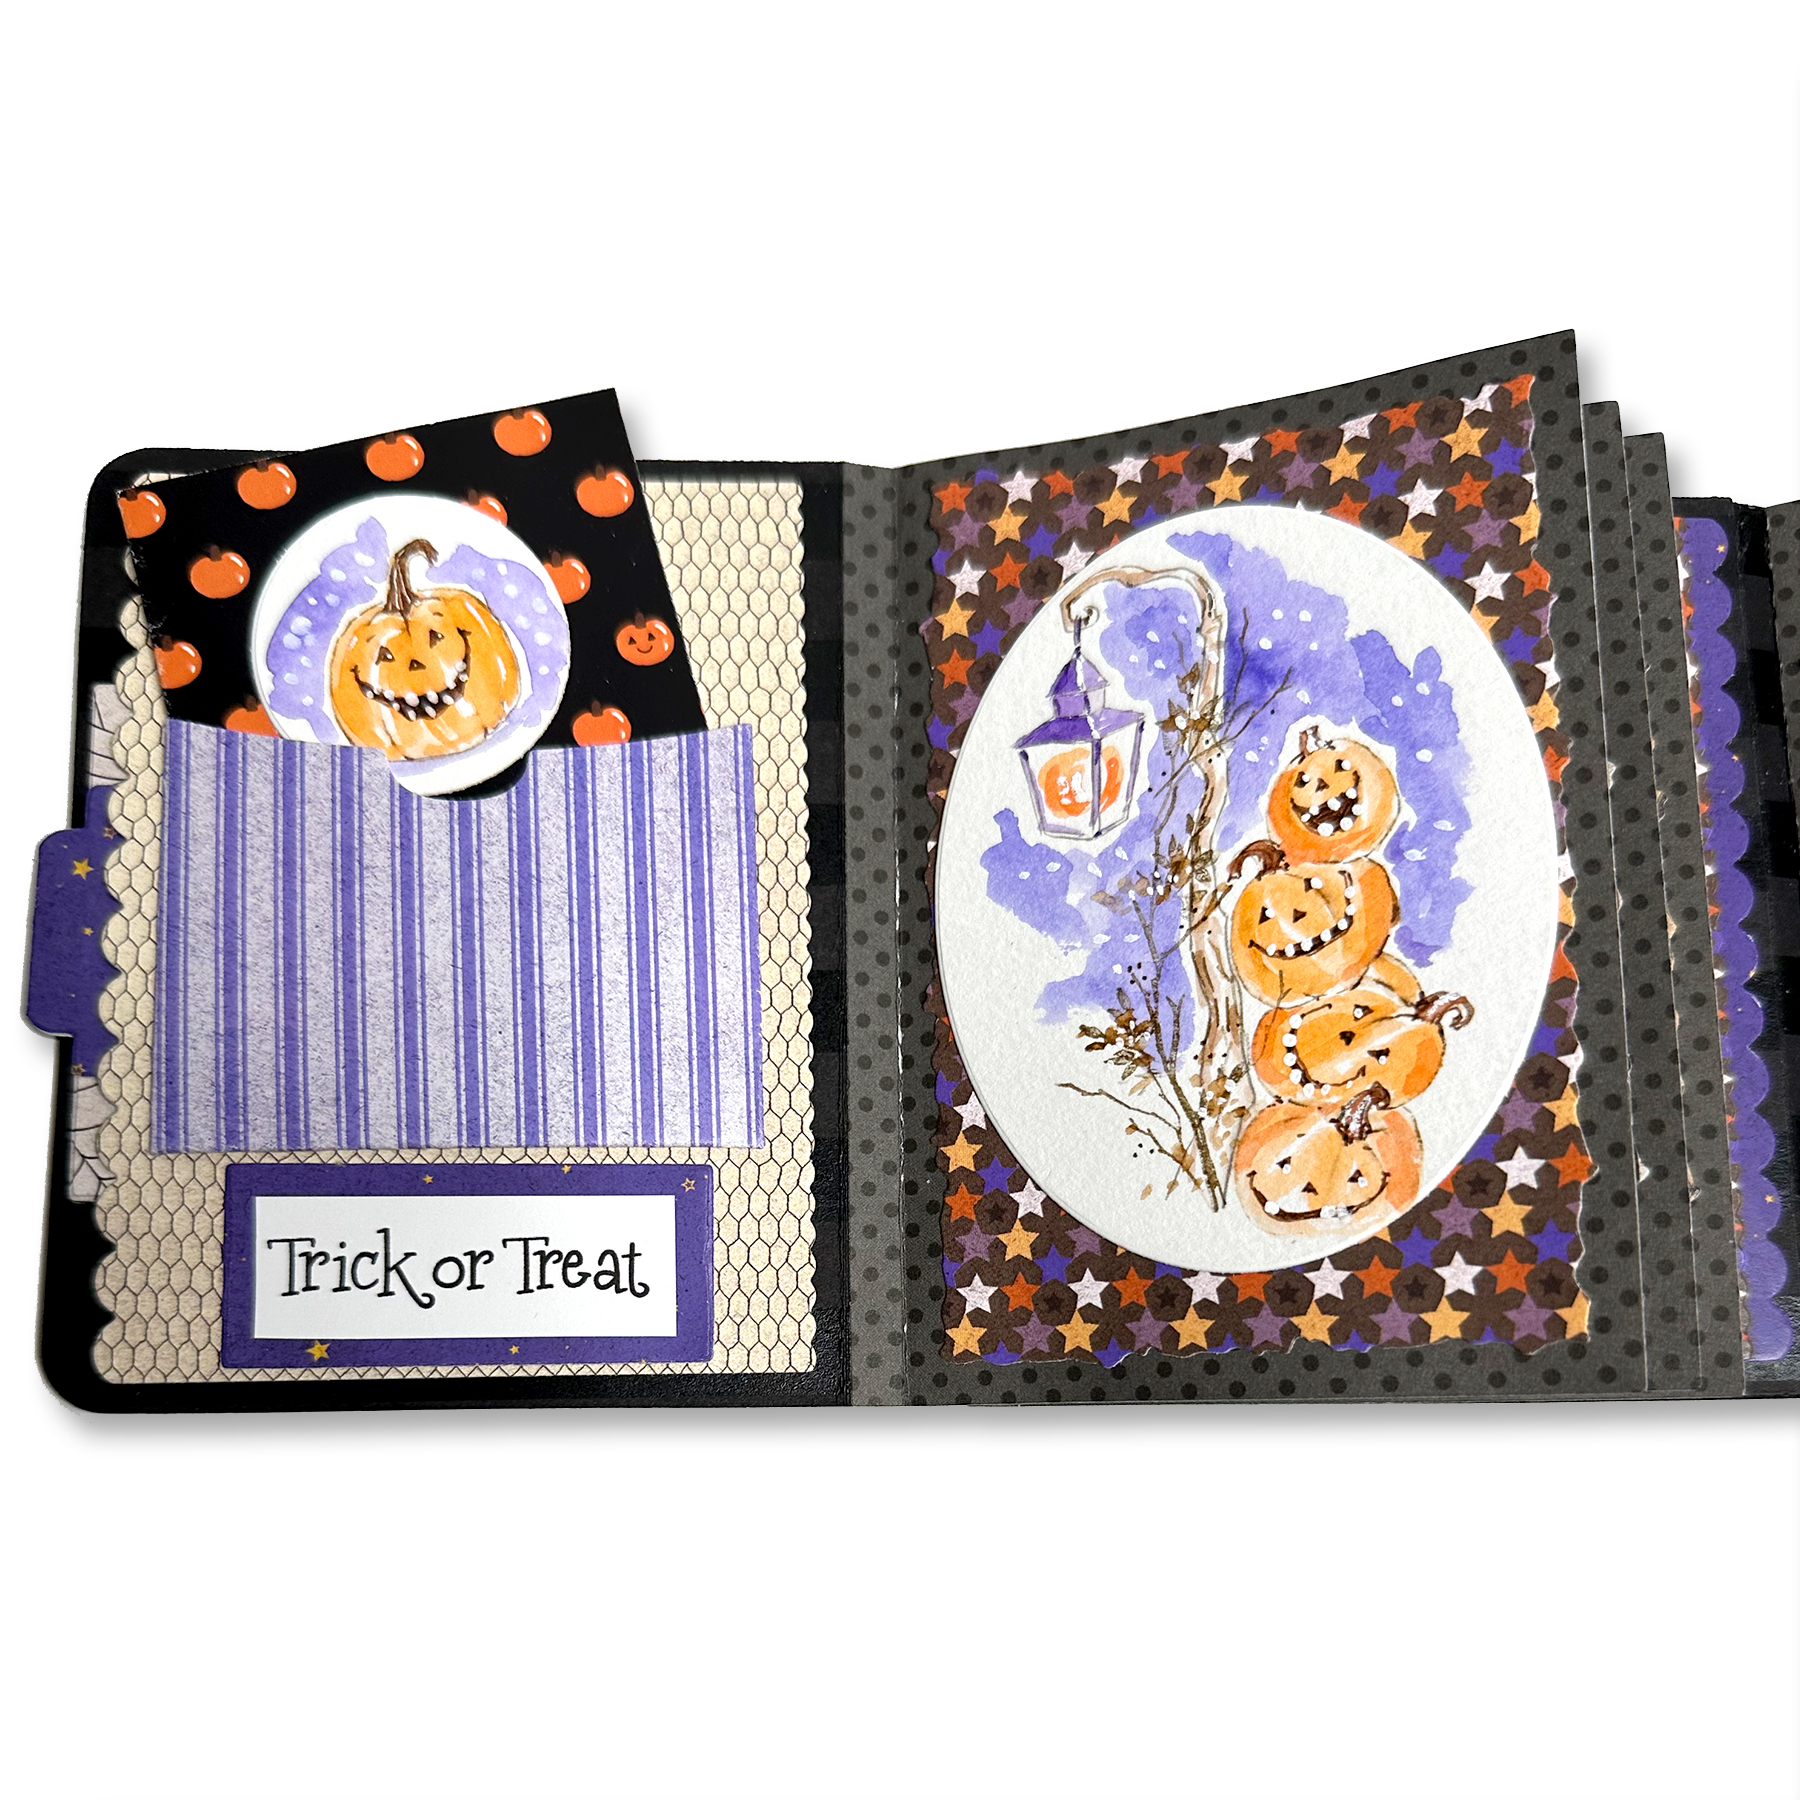 5605 – Halloween Journal Paper Pack – Art Impressions